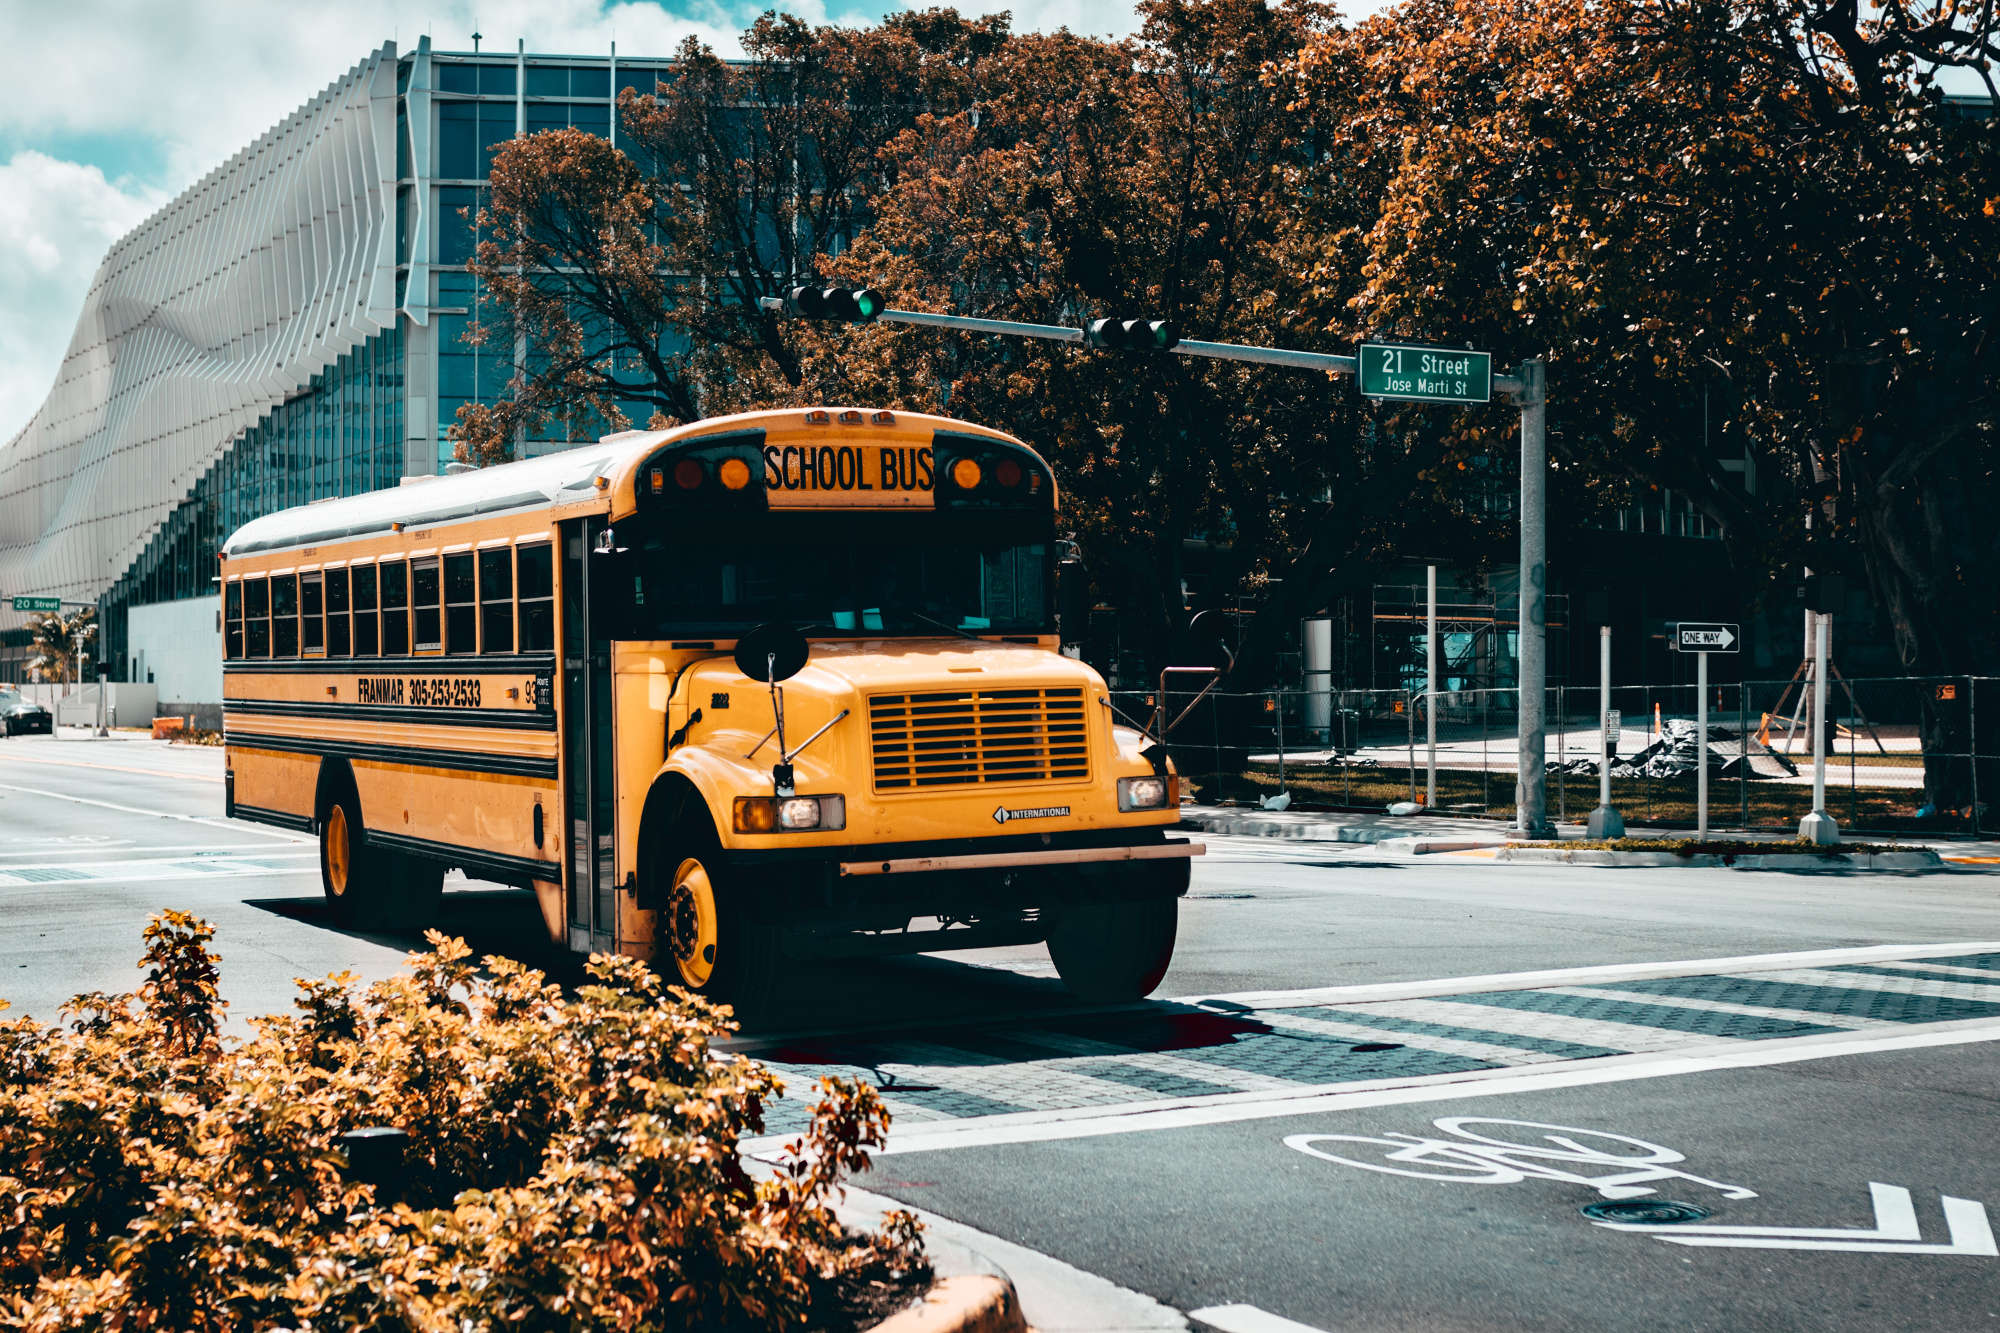 A school bus driving through a city